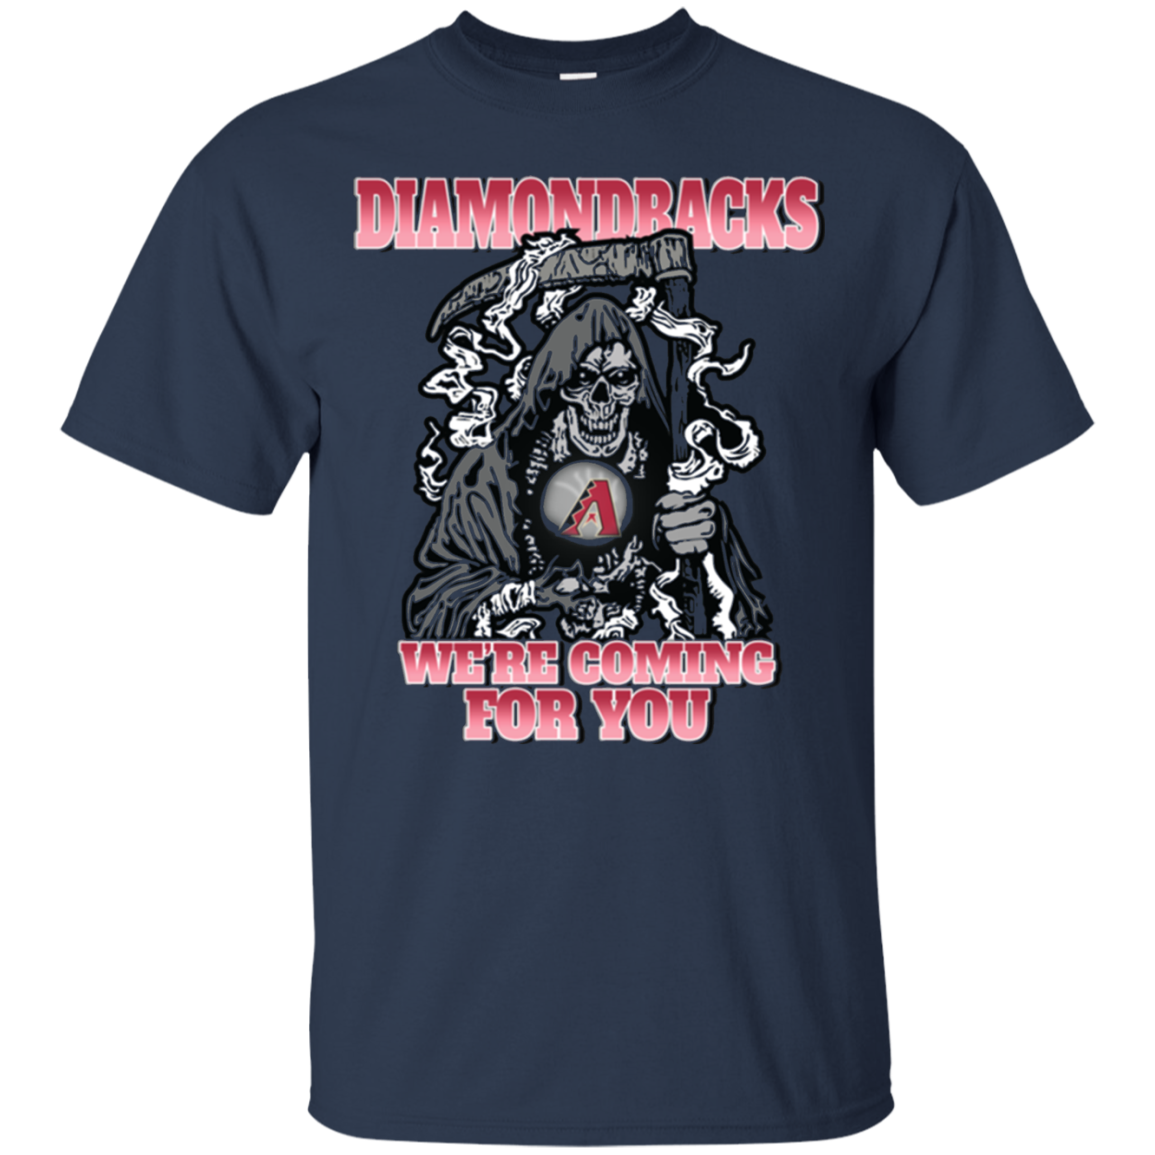 Halloween Shirt For Arizona Diamondbacks And Grim Reaper Fans T - Shirt For 